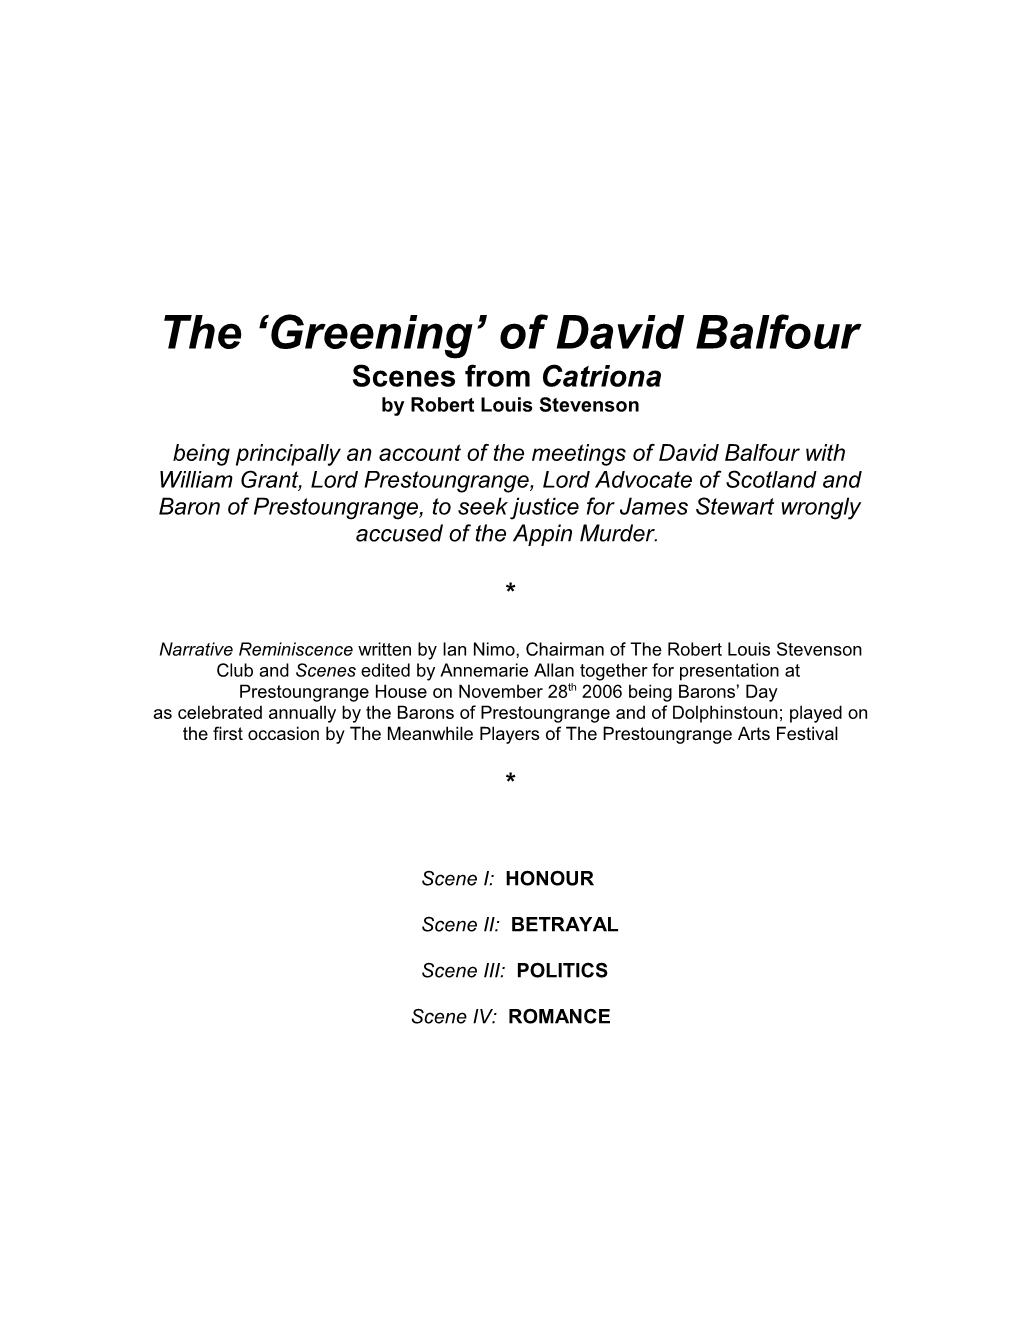 The Greening of David Balfour